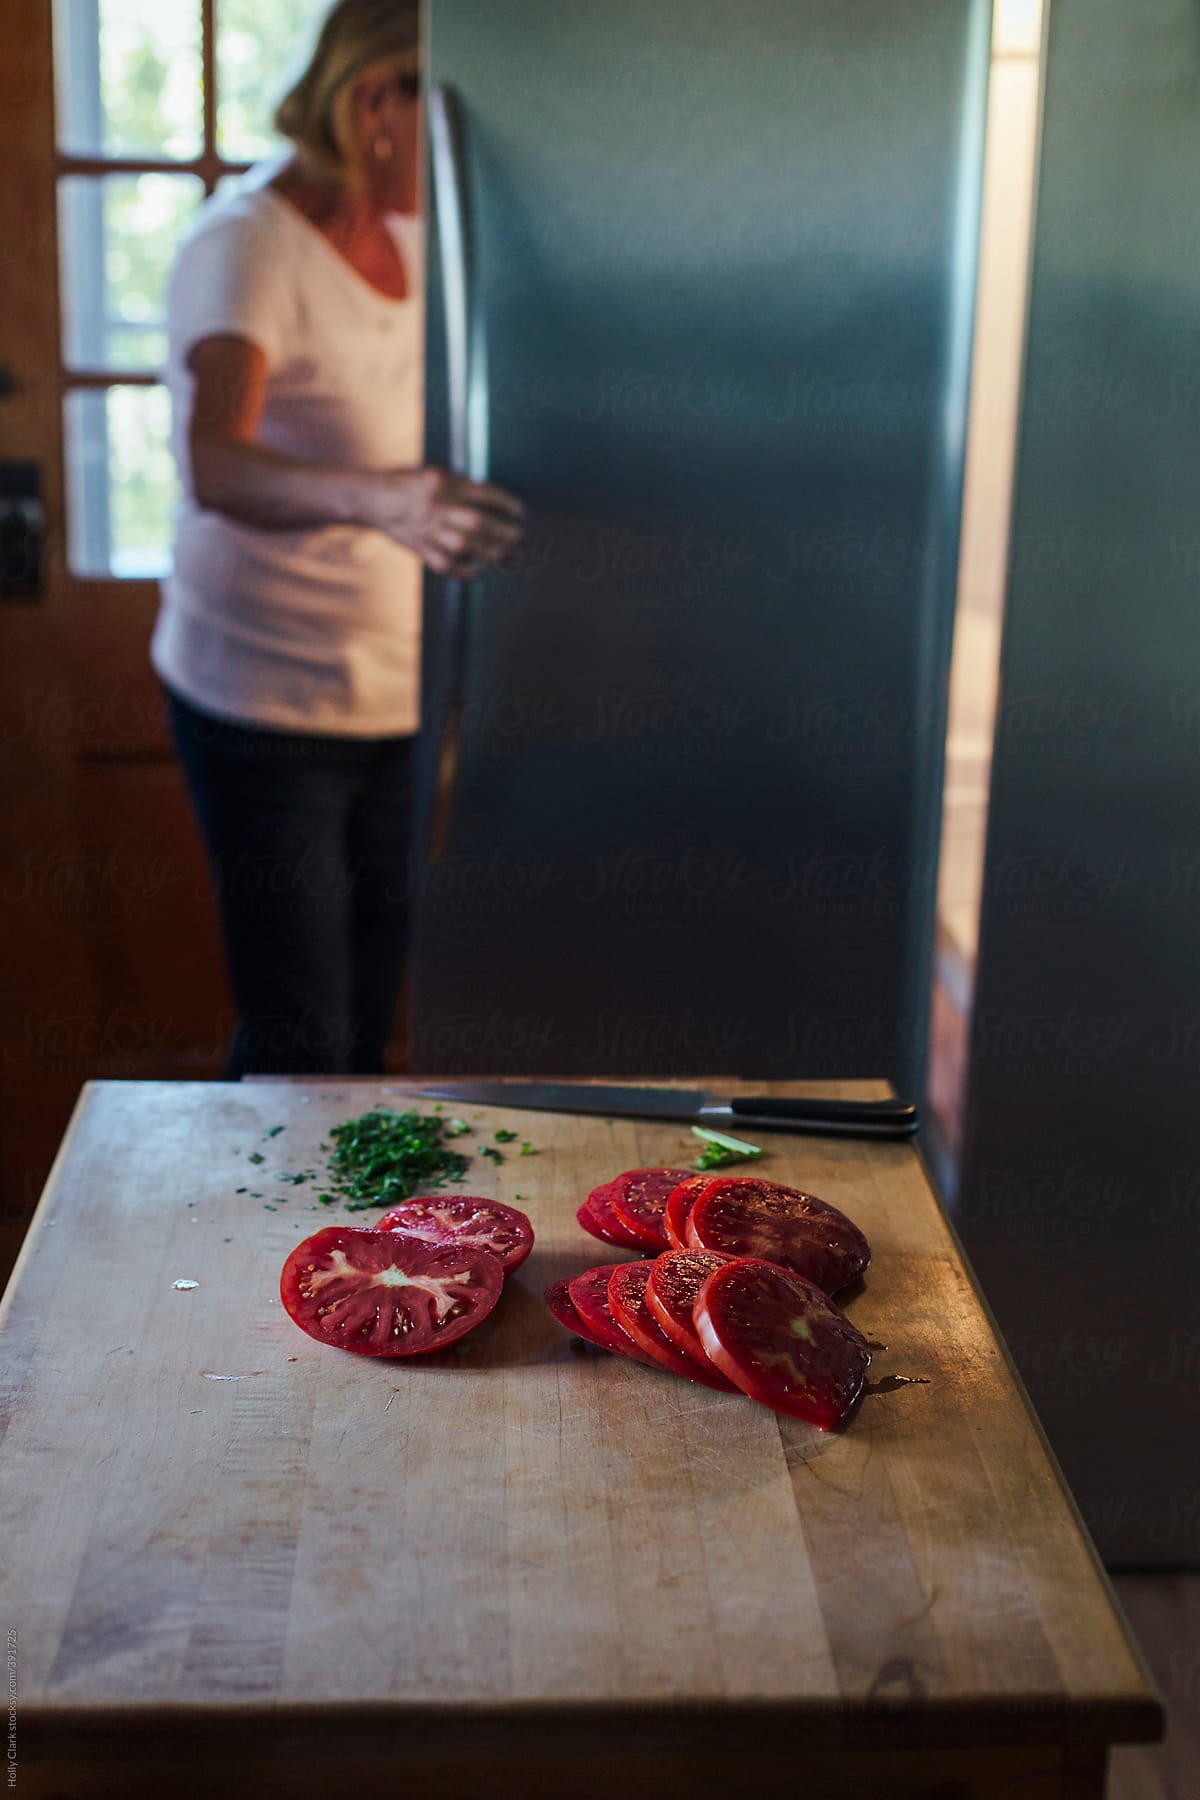 A woman looks inside refrigerator in kitchen